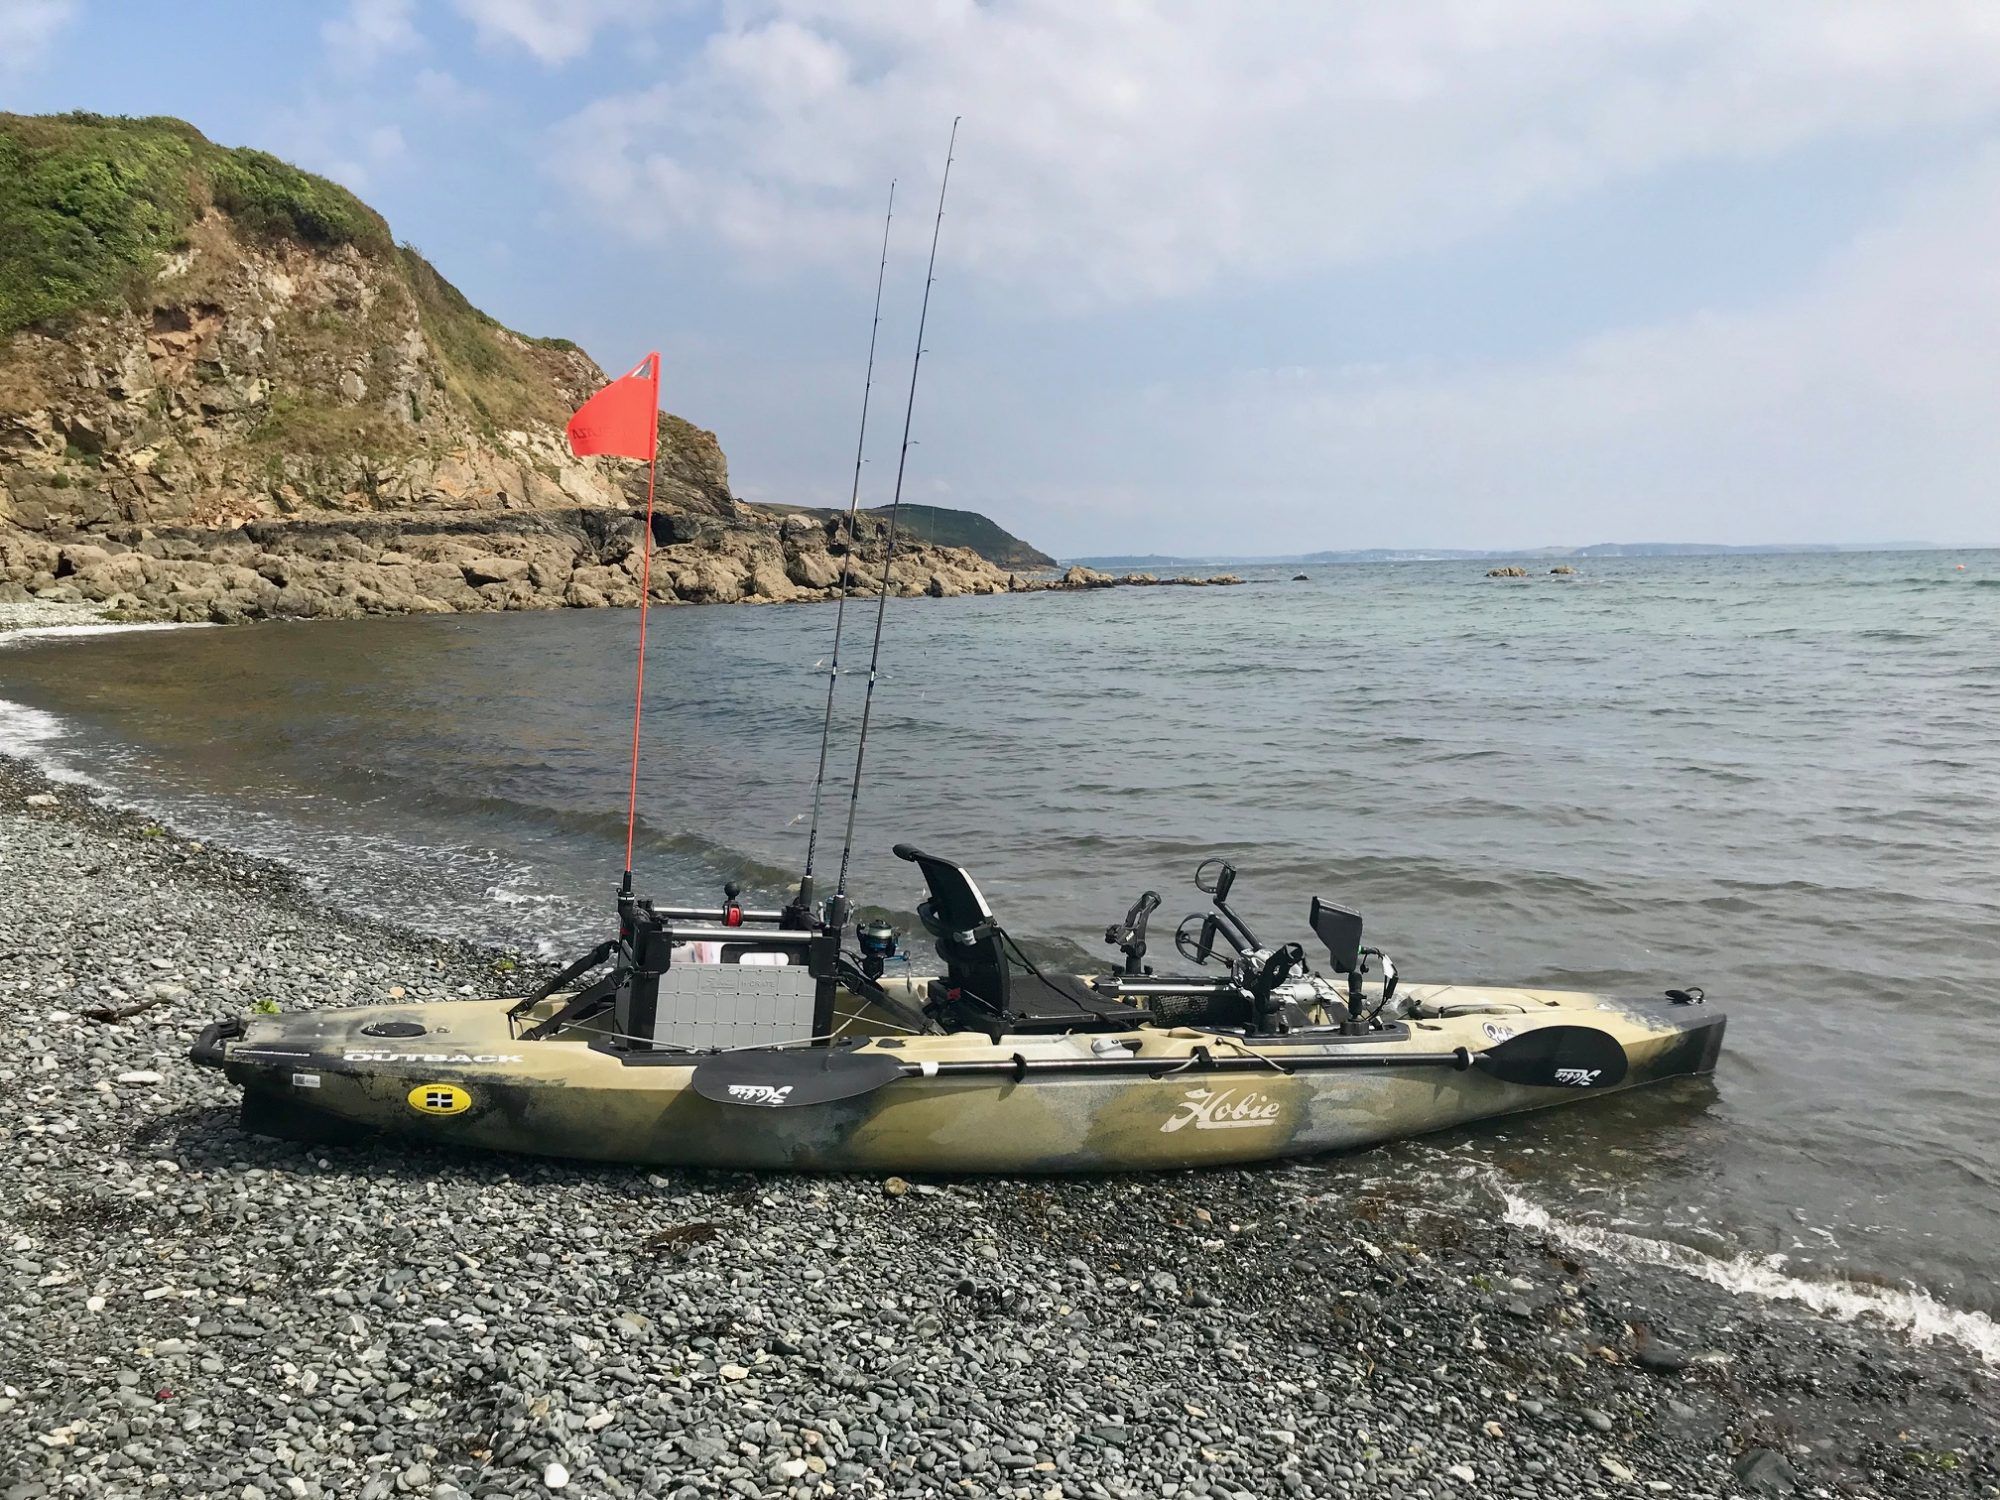 Launching a fishing kayak from a beach